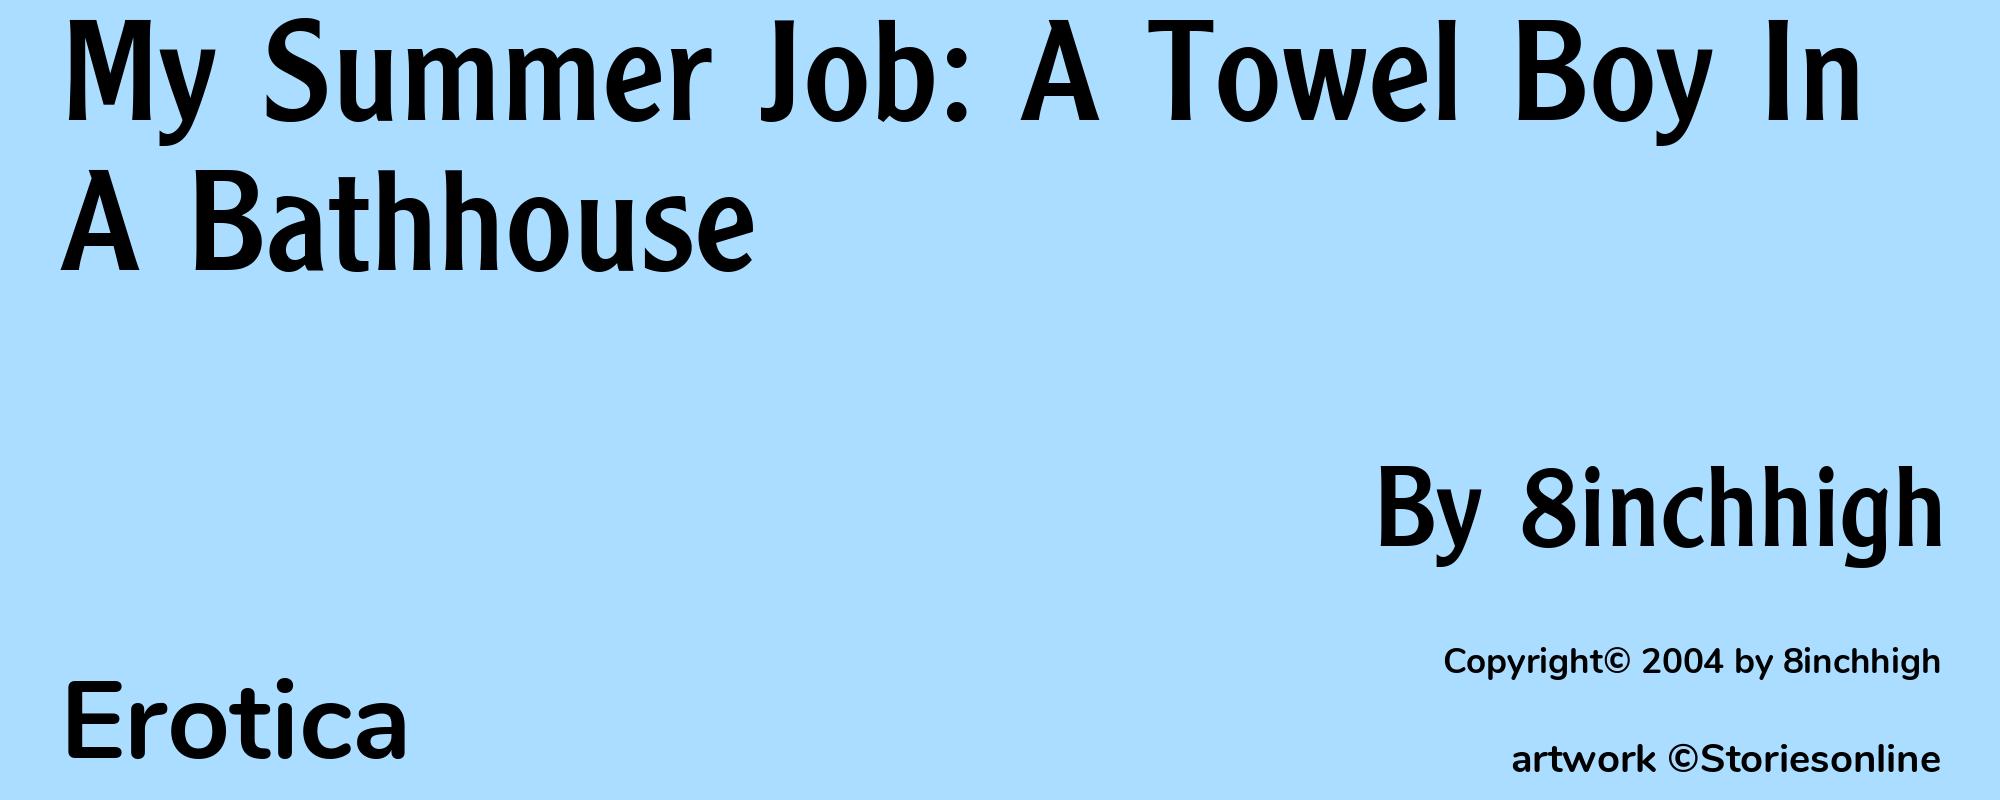 My Summer Job: A Towel Boy In A Bathhouse - Cover